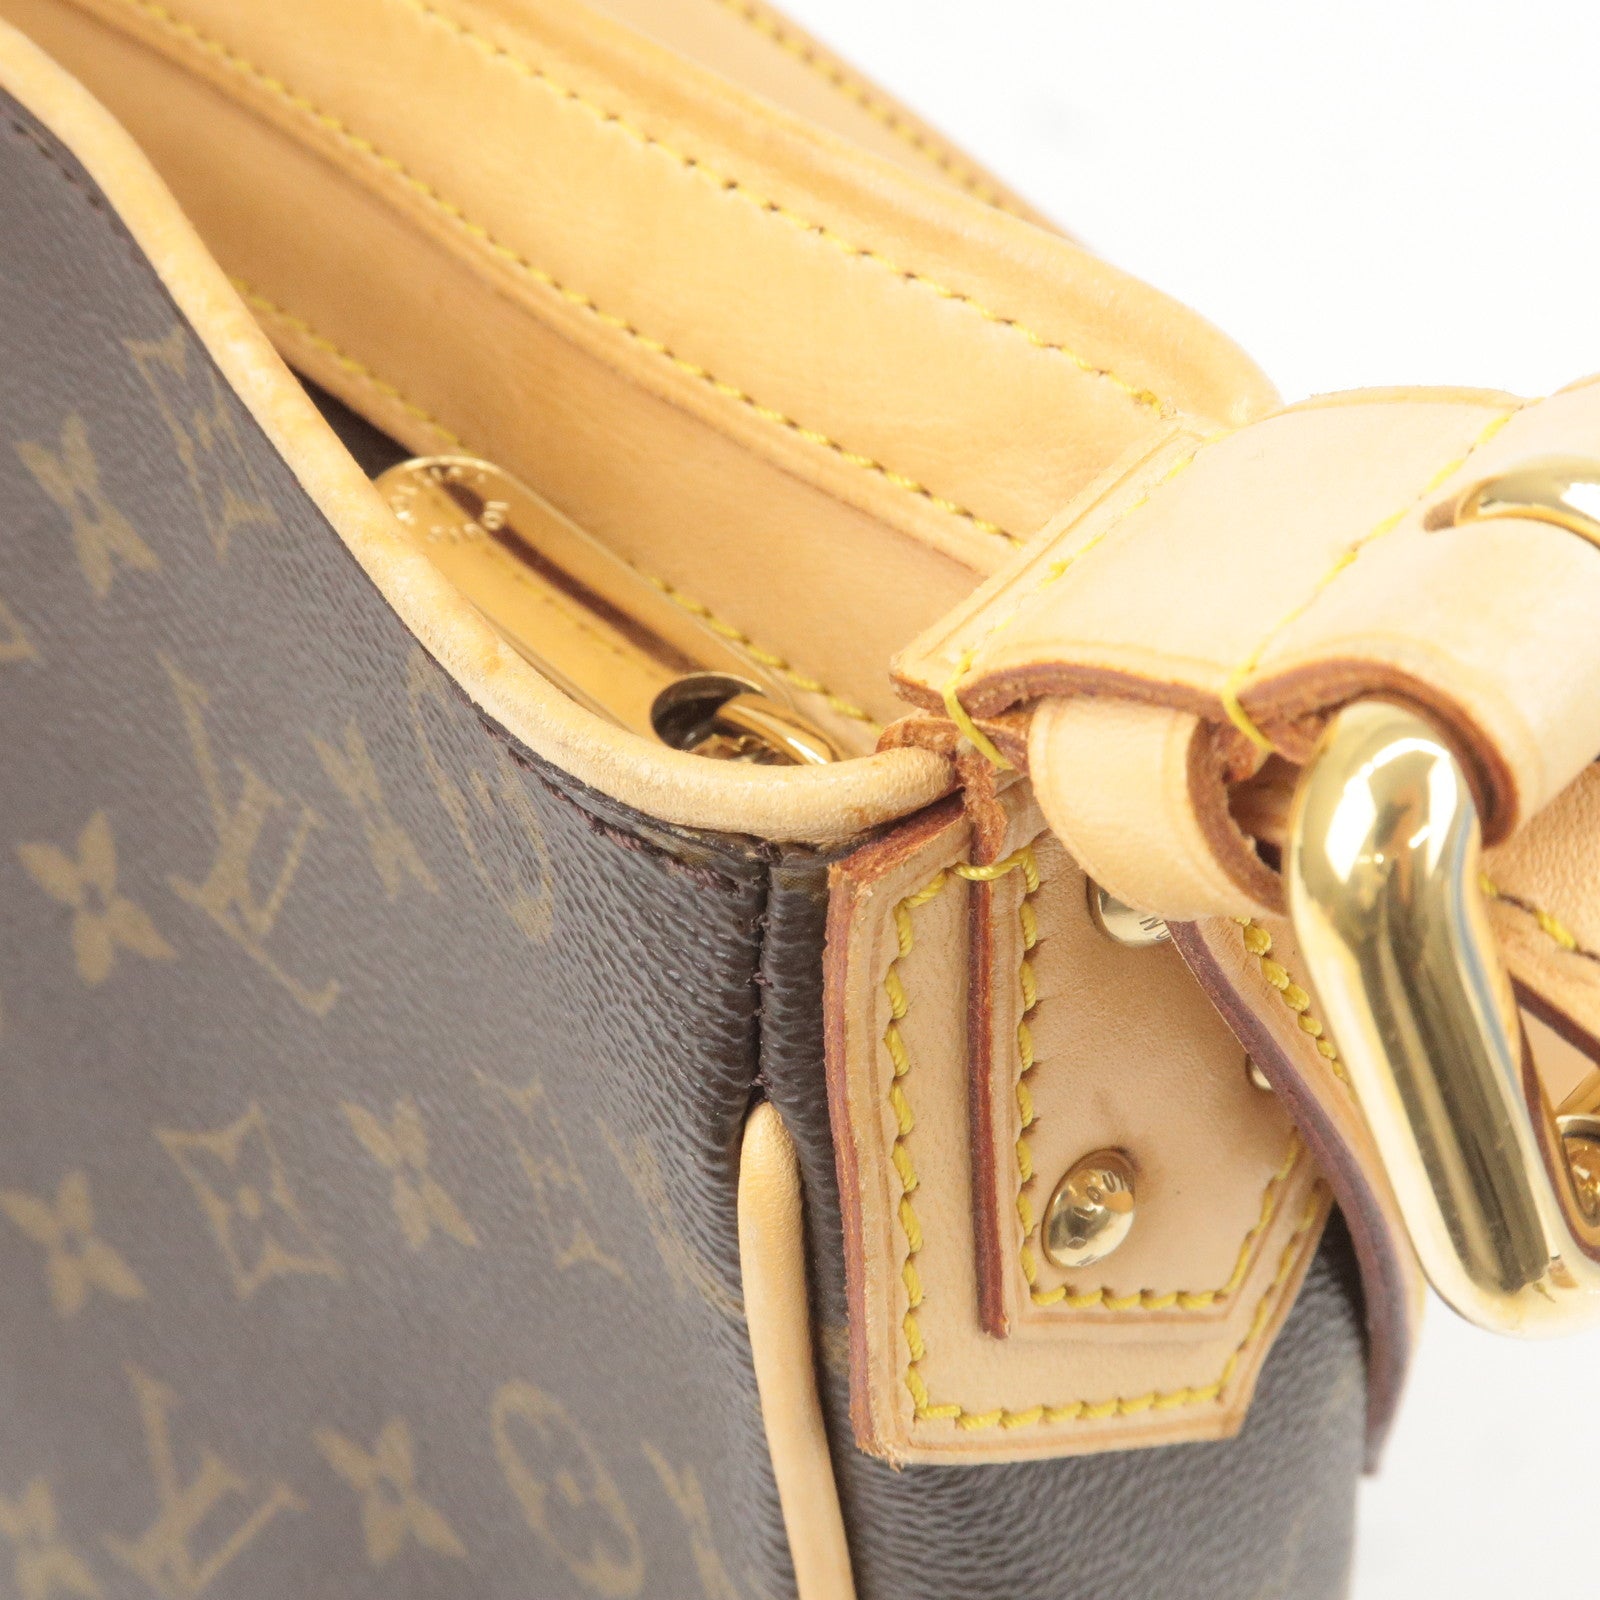 Louis Vuitton, Bags, Louis Vuitton Hudson Gm